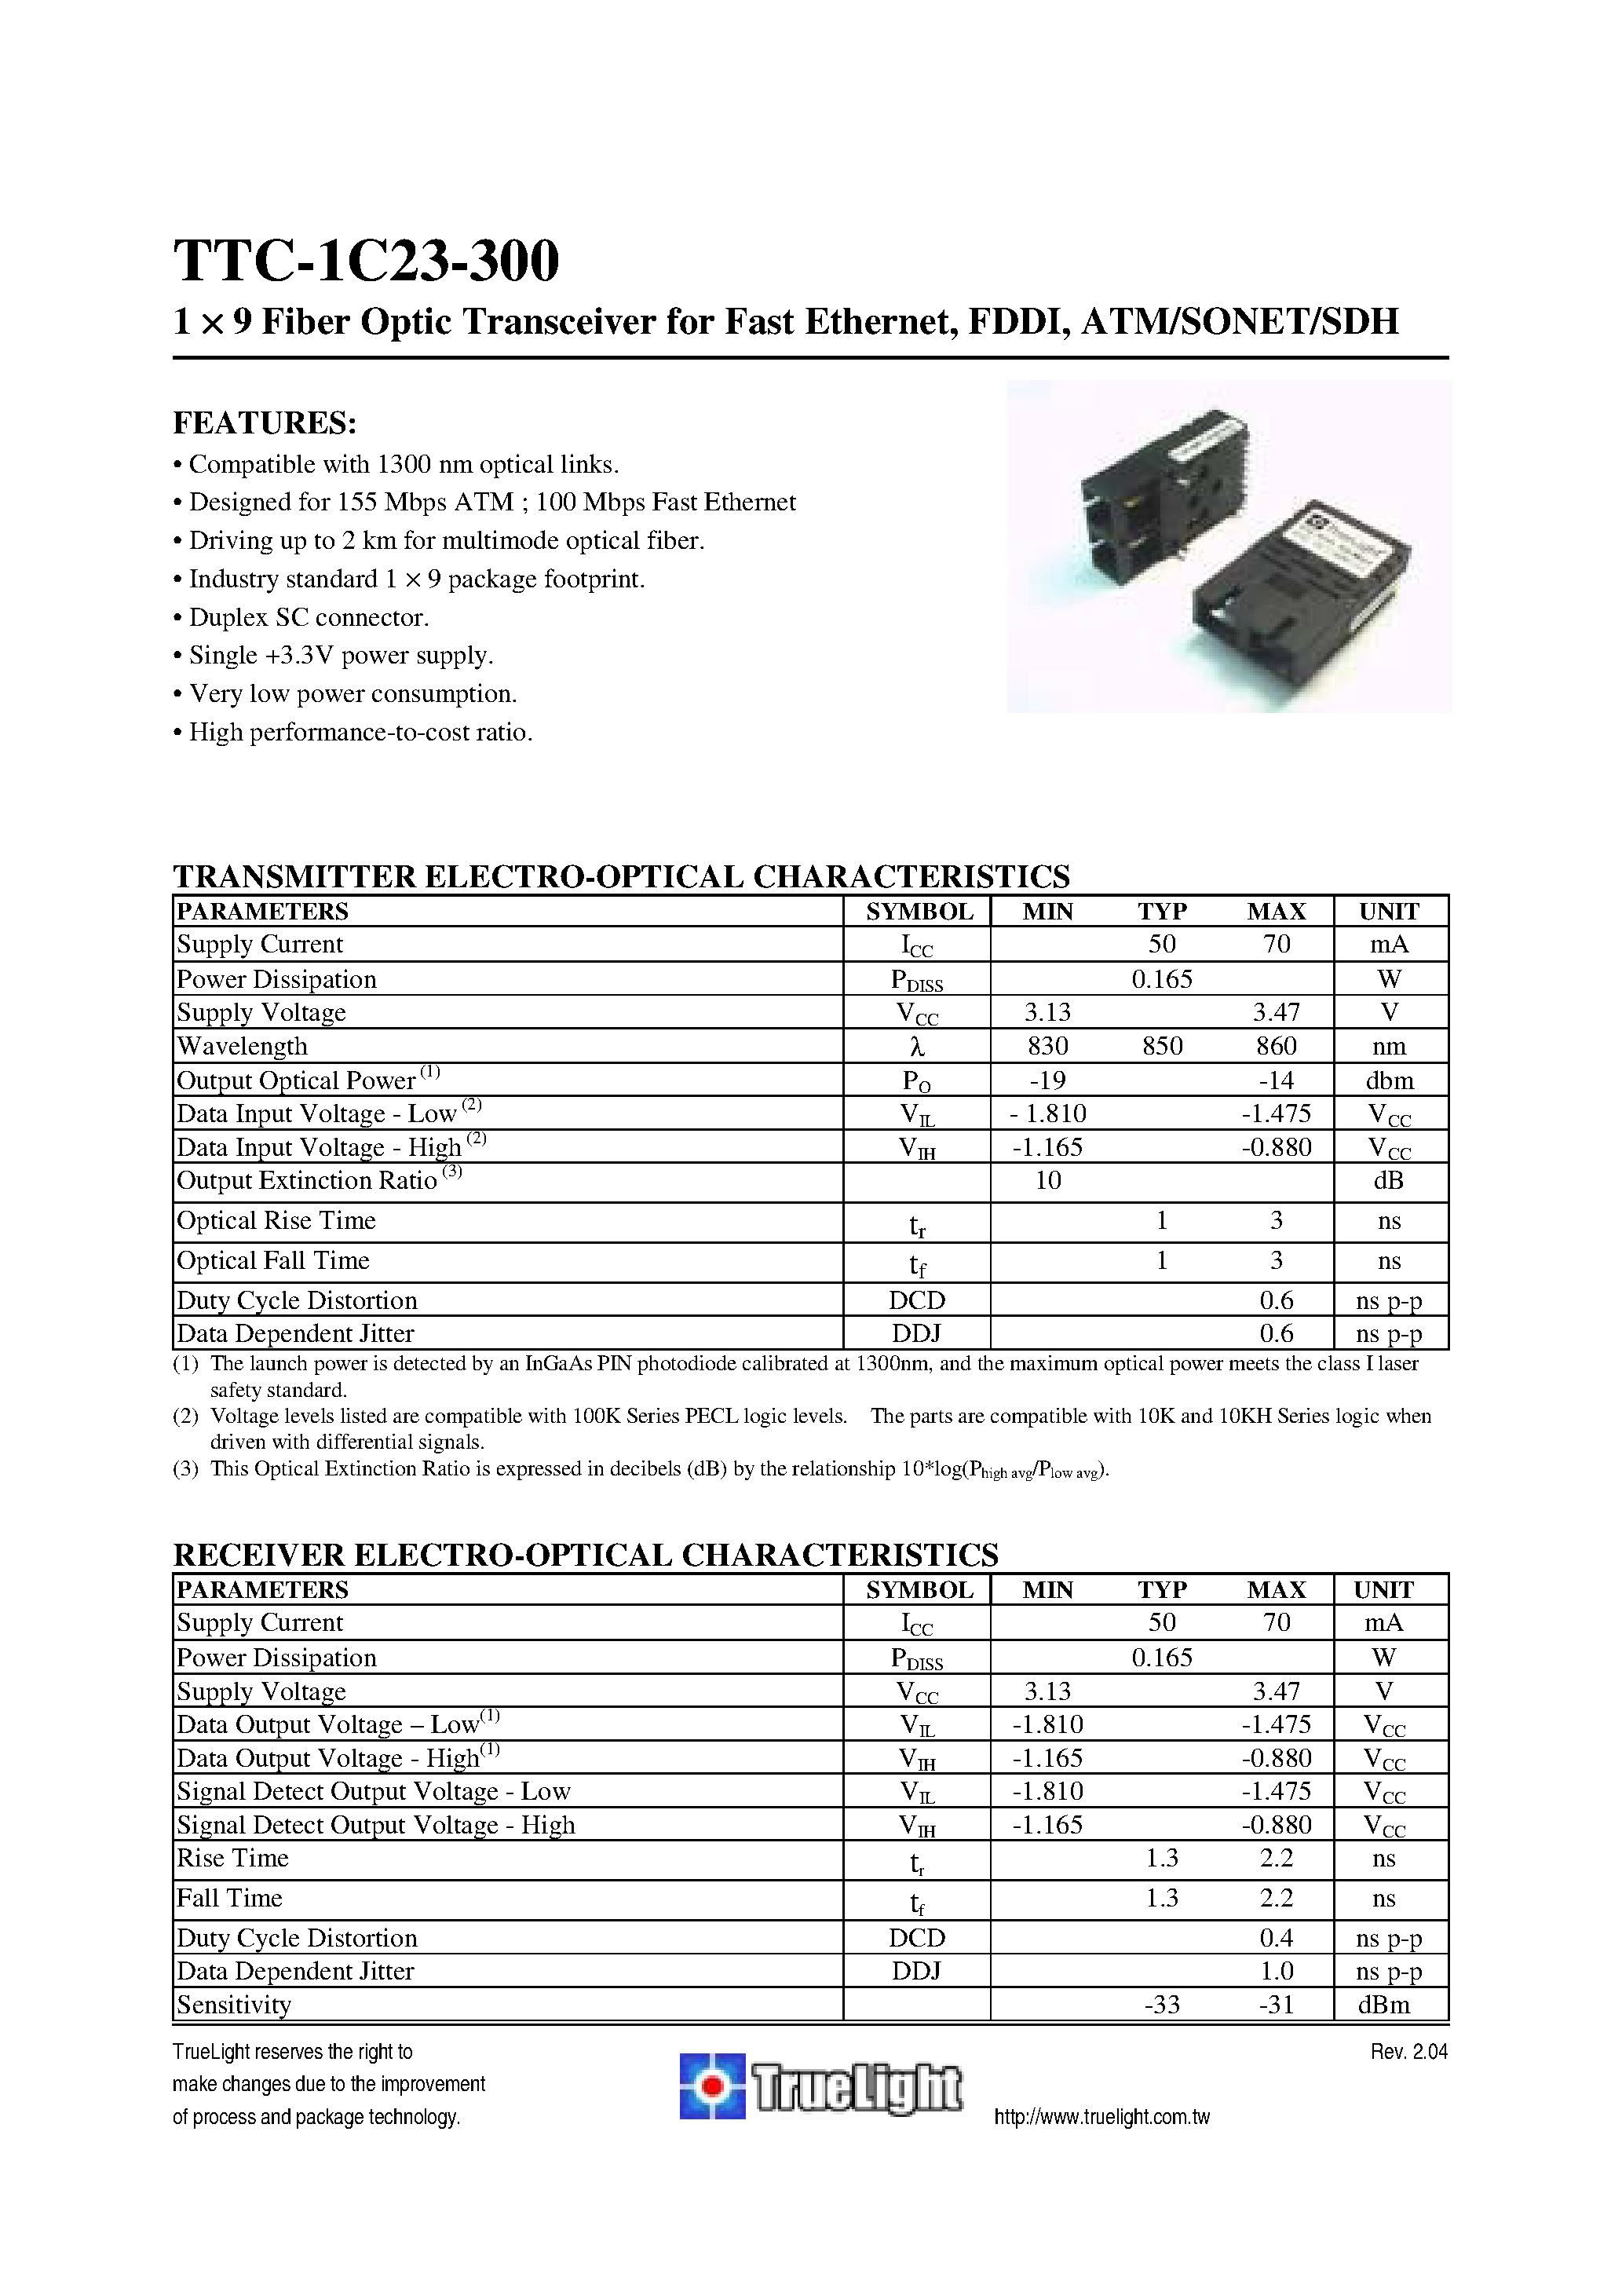 Datasheet TTC-1C23-300 - 1 9 Fiber Optic Transceiver for Fast Ethernet/ FDDI/ ATM/SONET/SDH page 1